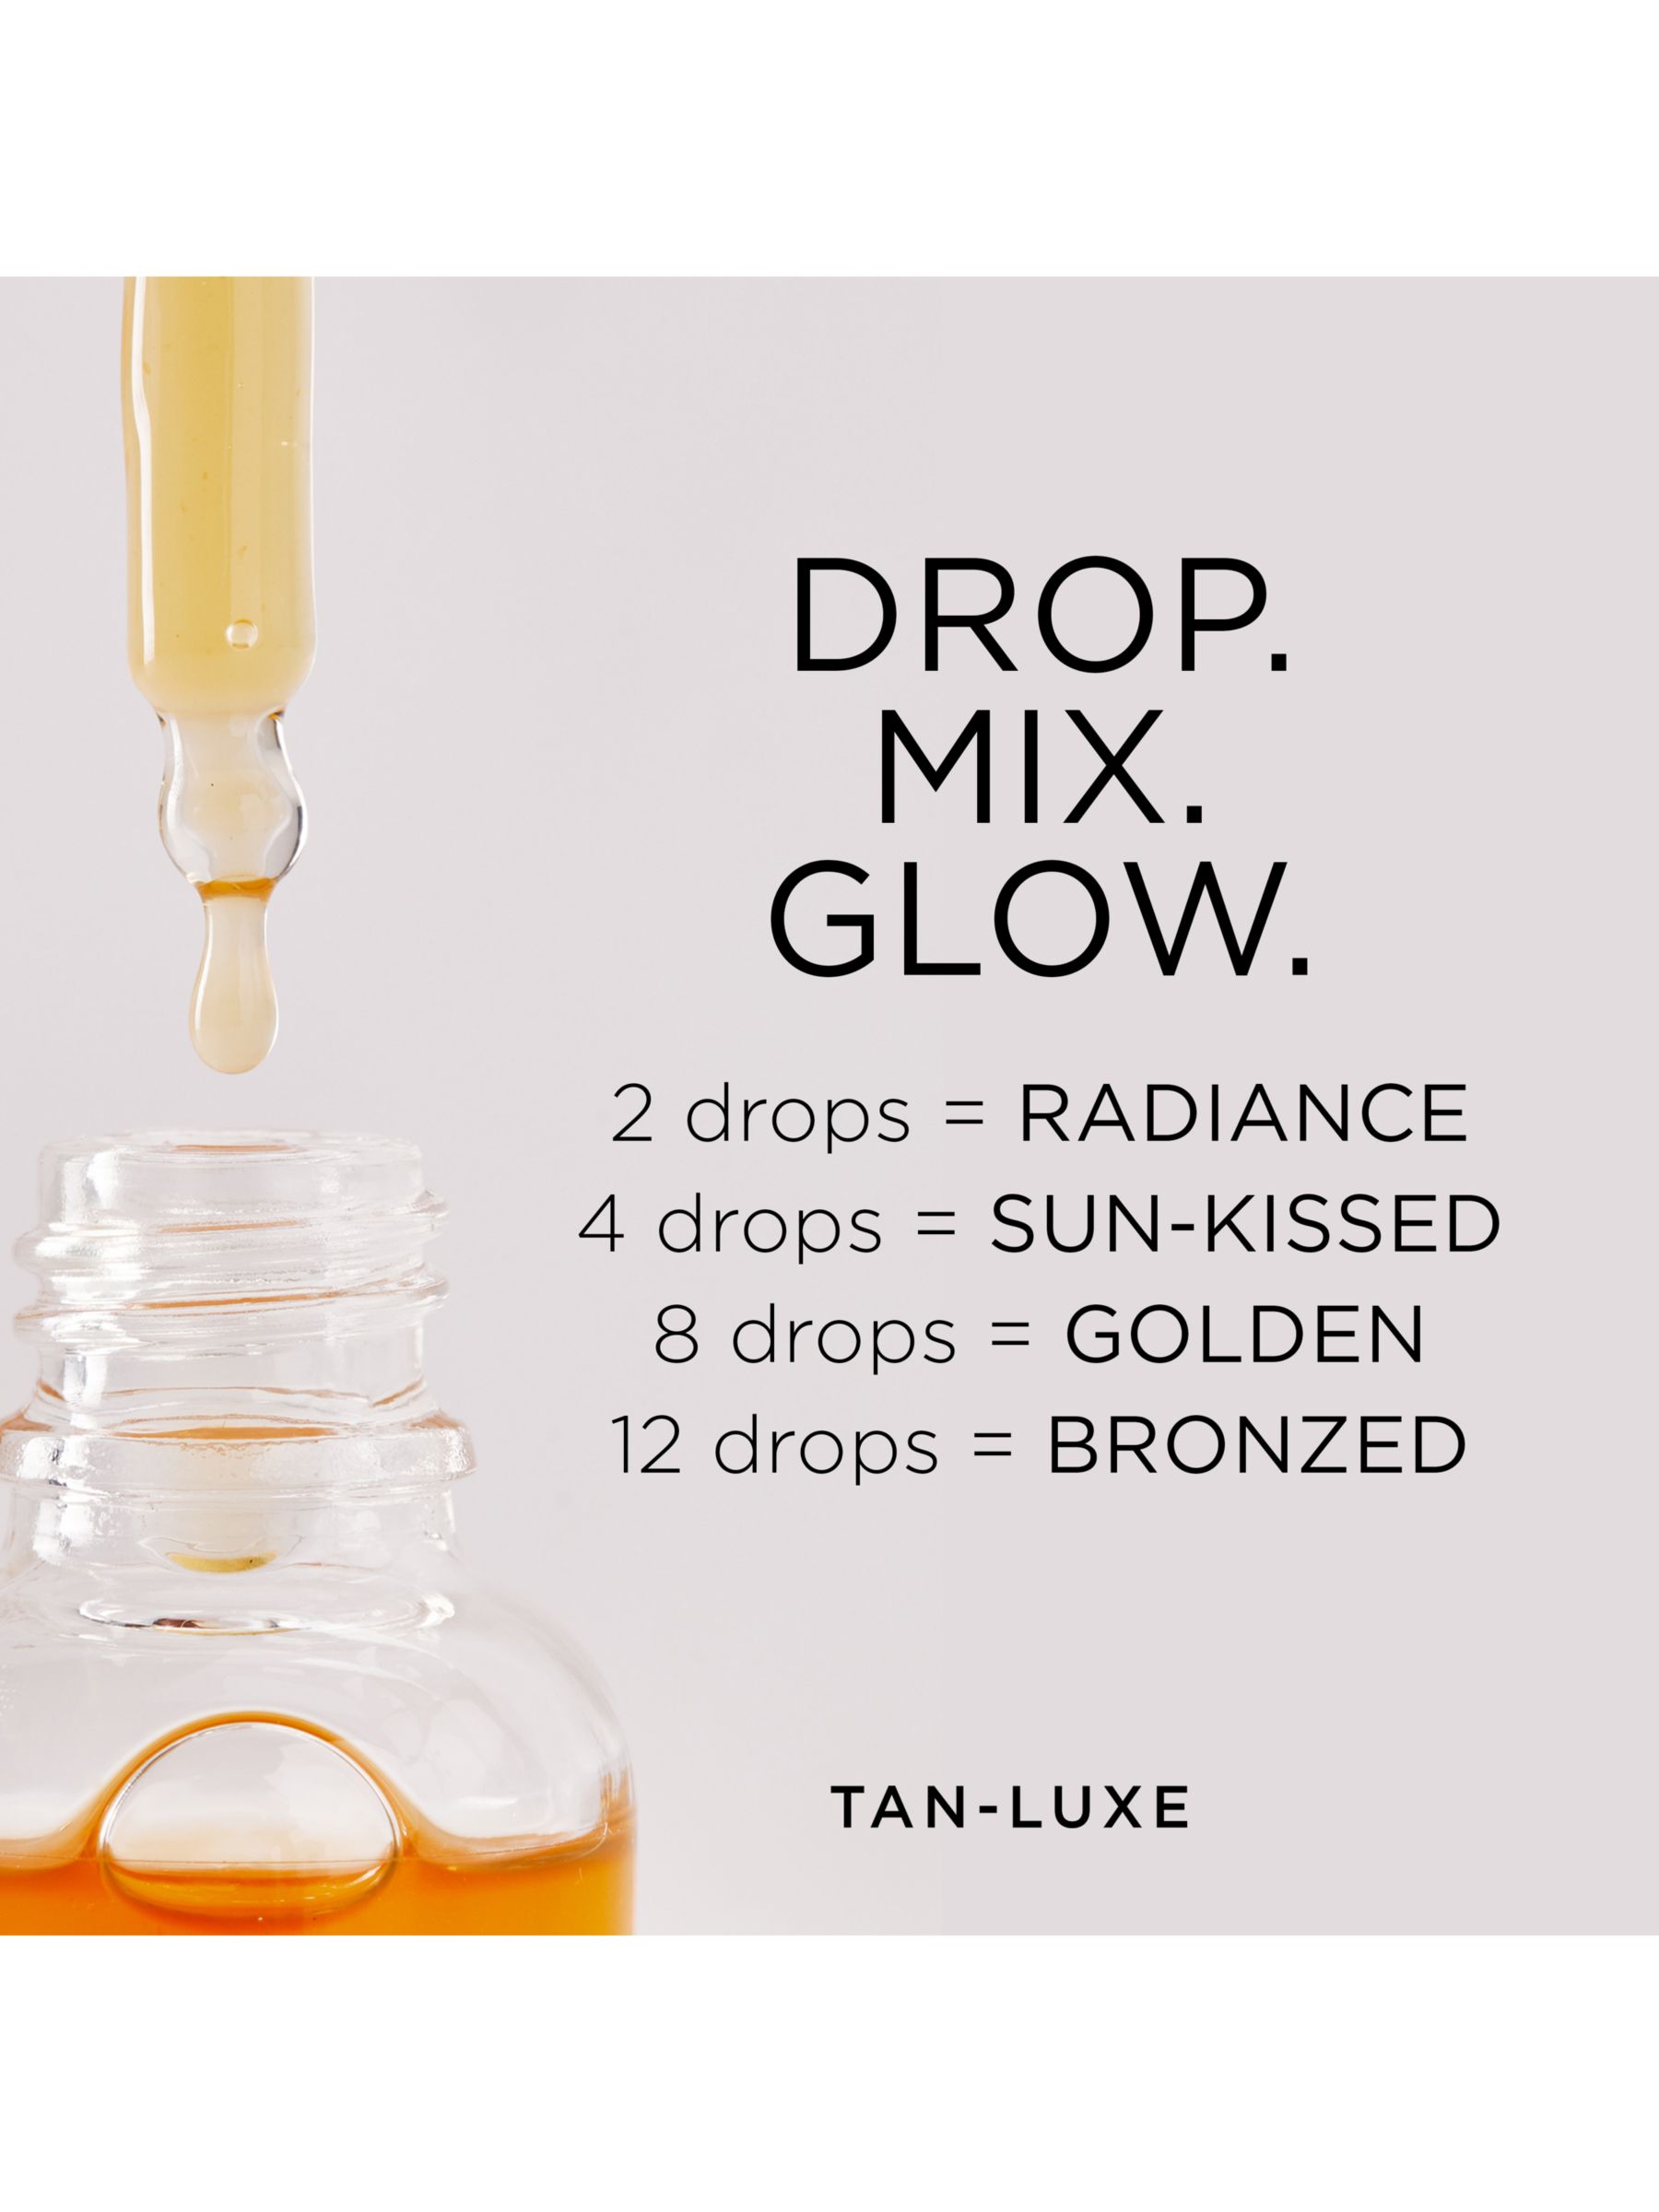 Tan-Luxe The Face Anti-Age Rejuvenating Self-Tan Drops, Medium/Dark 4